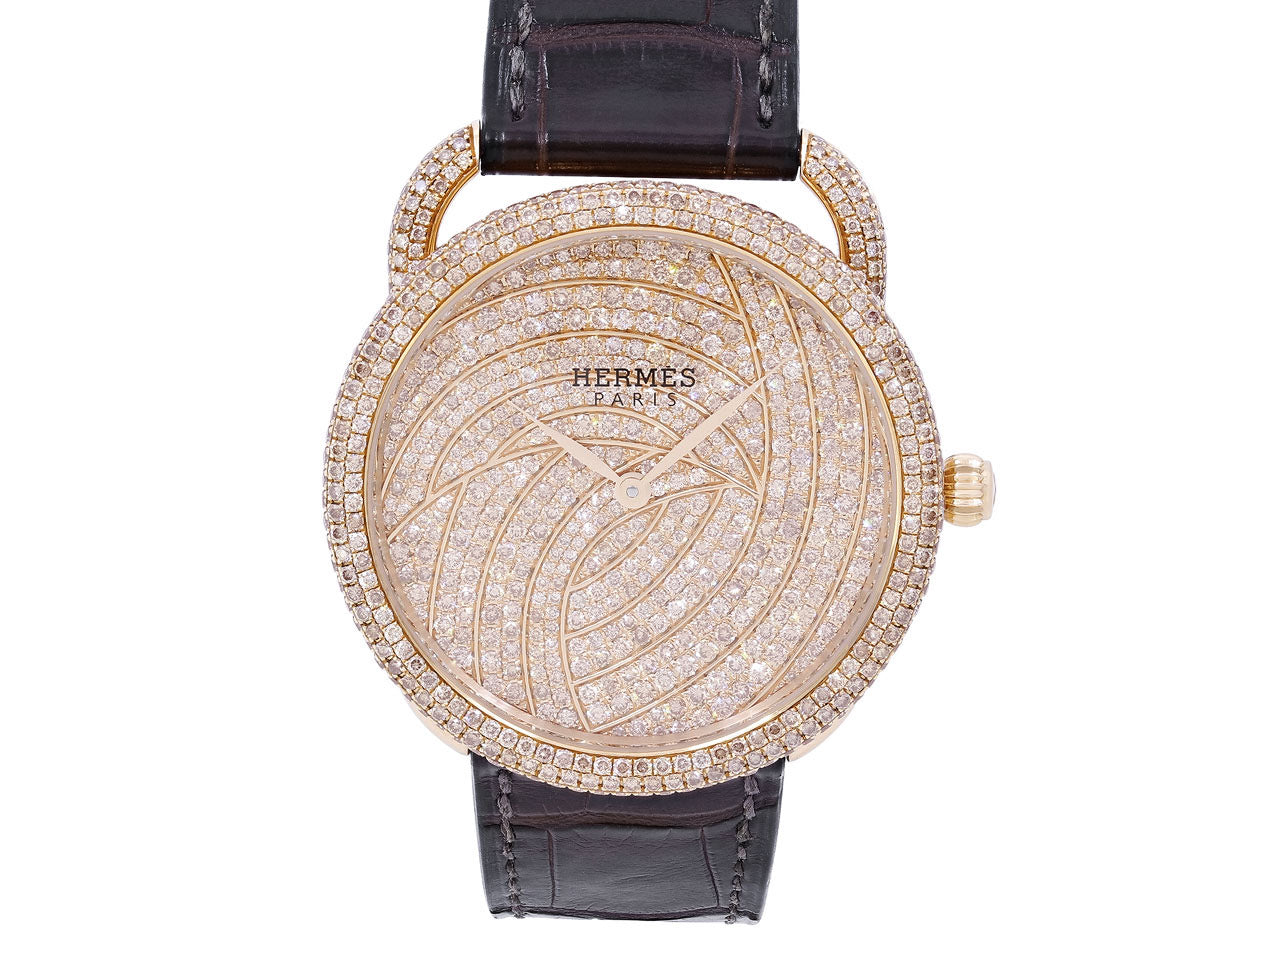 Hermès 'Arceau' Diamond Watch in 18K Rose Gold, 41mm